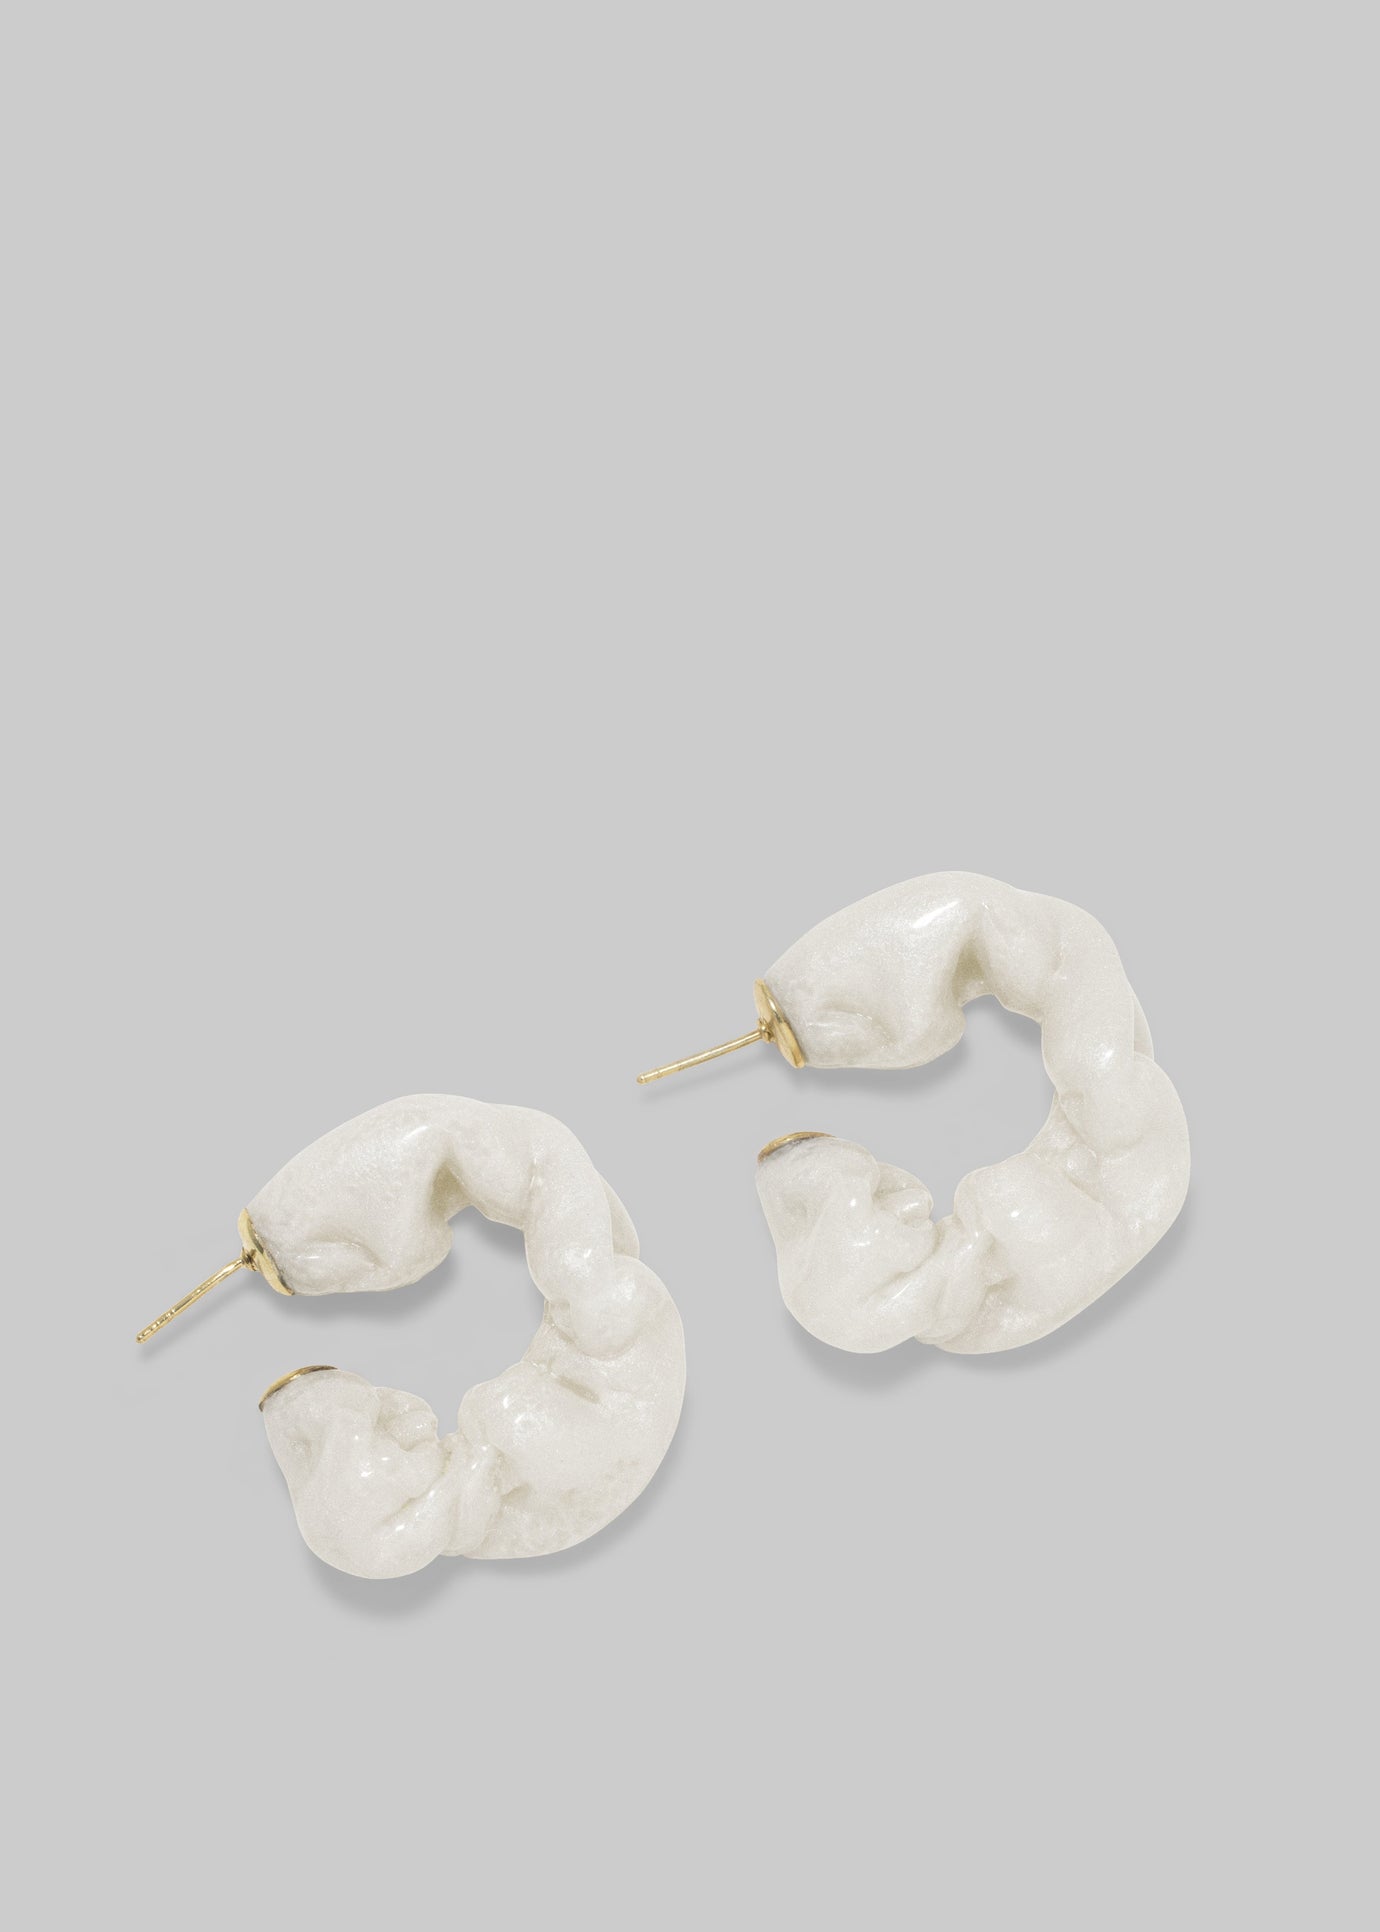 Completedworks Ruffle Bio-Resin Earrings - White